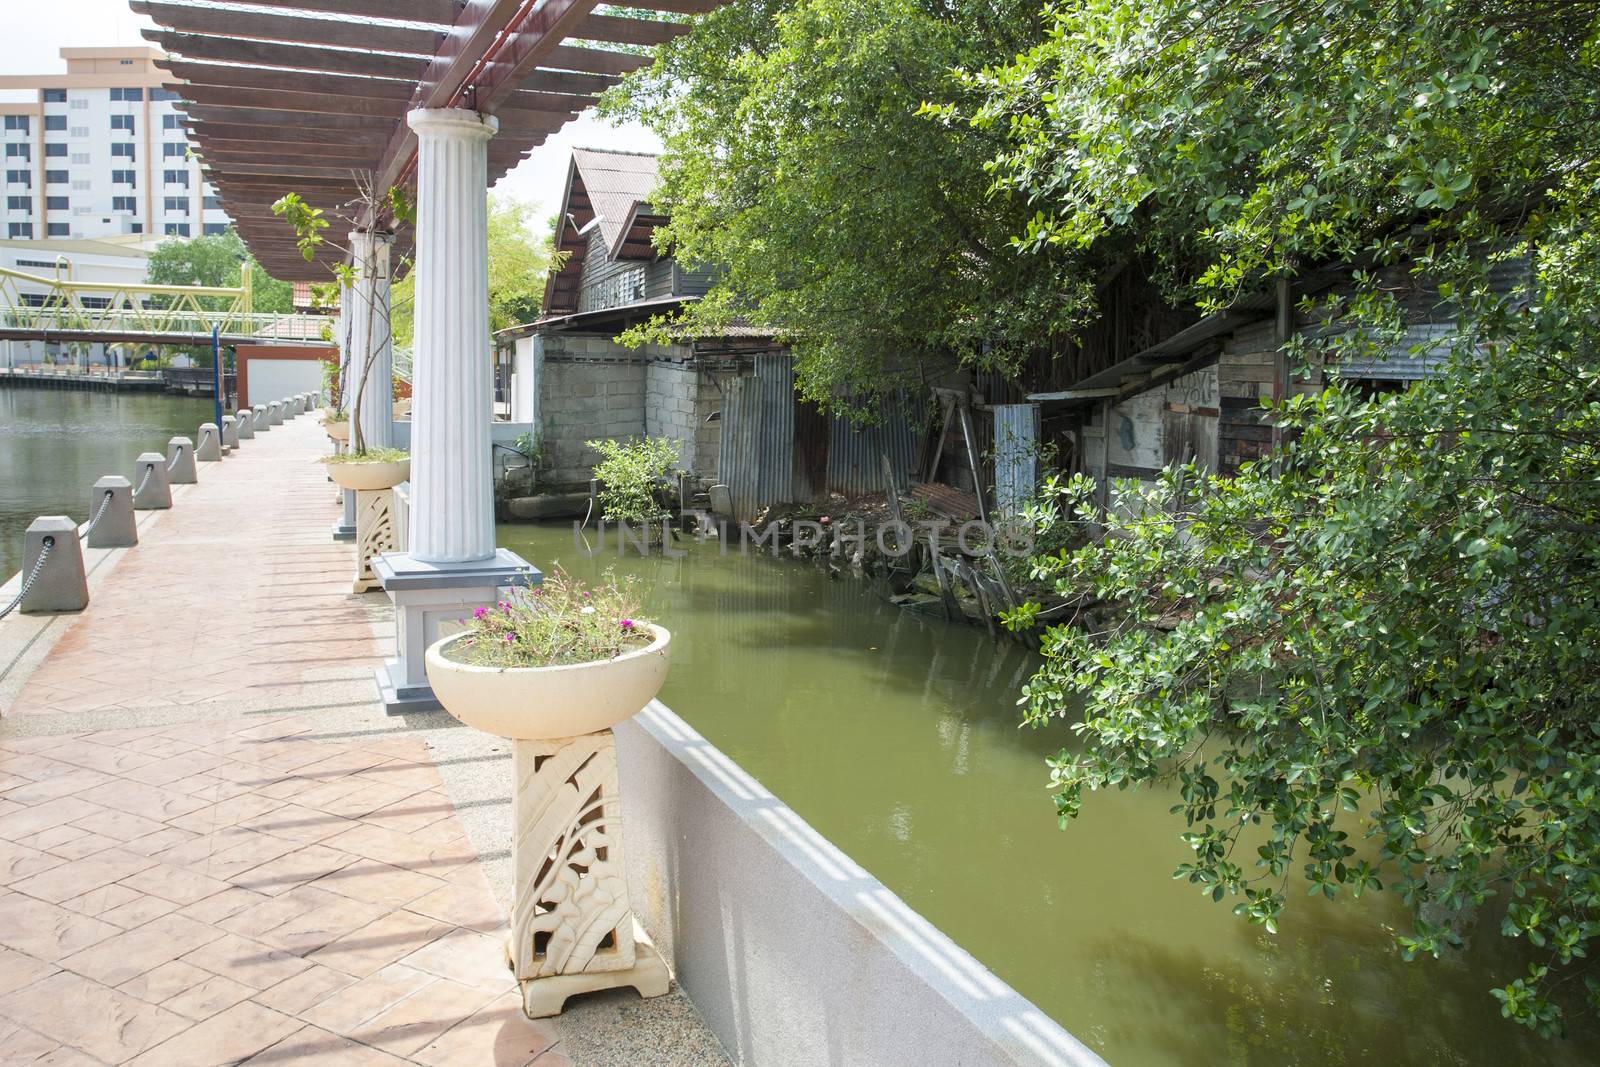 Malacca City Riverside Promenade, Malaysia. Malacca is listed as UNESCO World Heritage Site since 2008